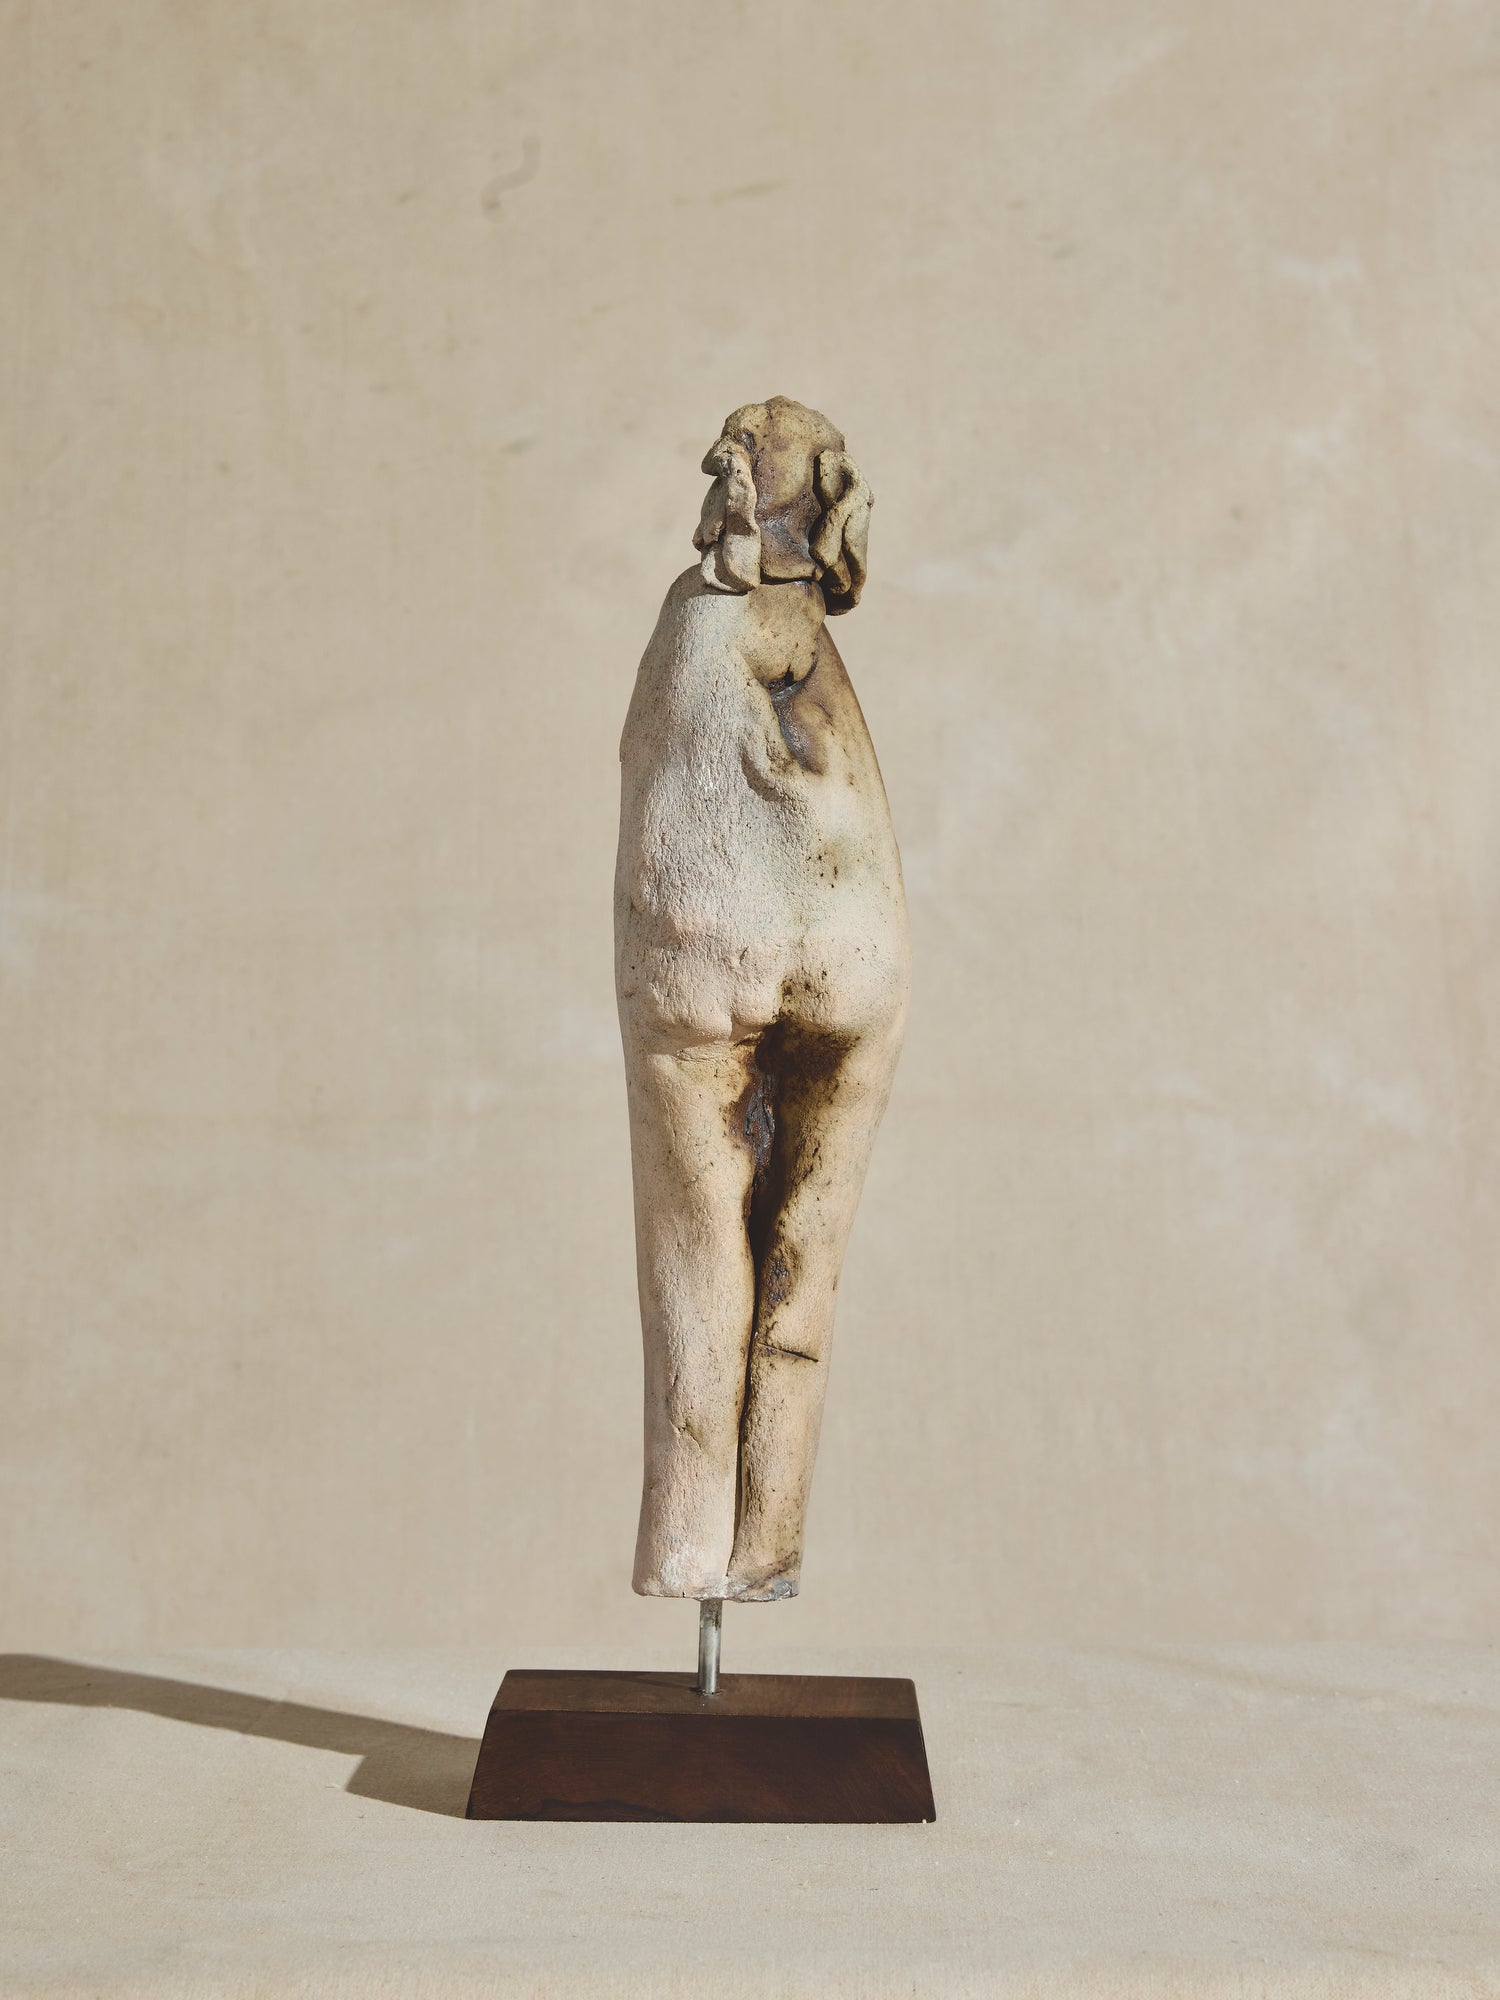 Abstract ceramic sculpture  figure on wood pedestal, artist OZwaig